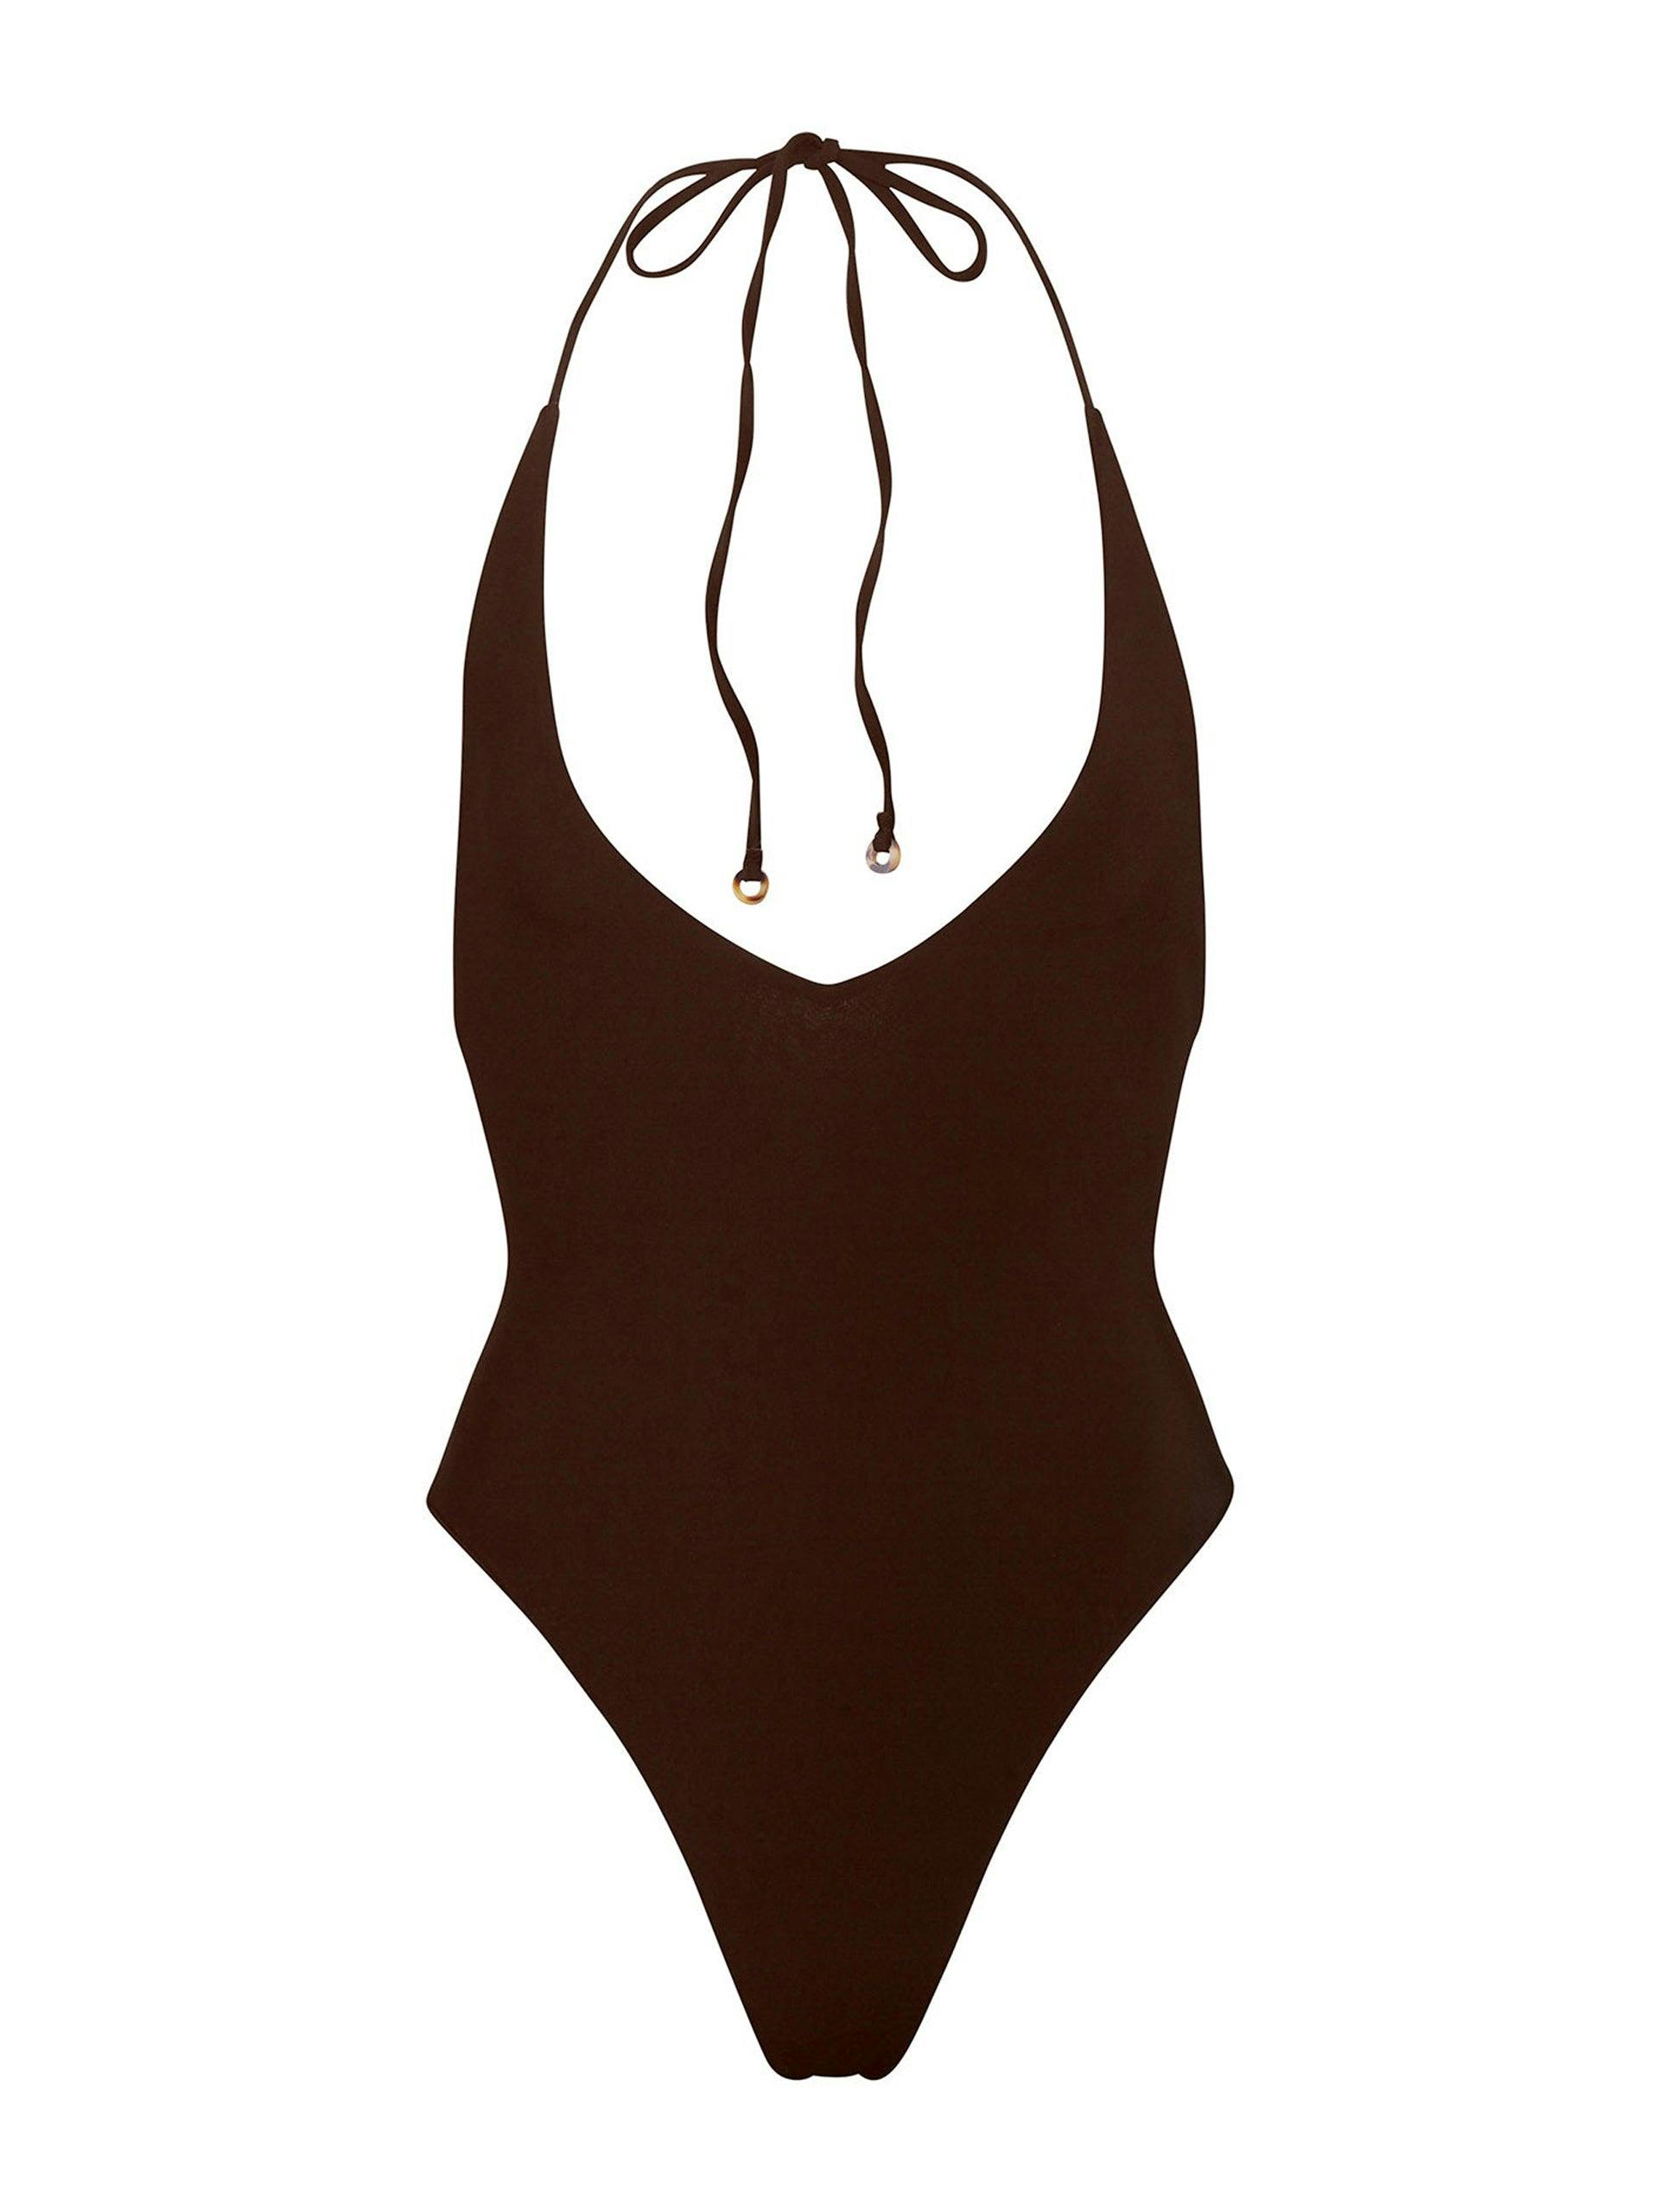 The lange halter-neck swimsuit